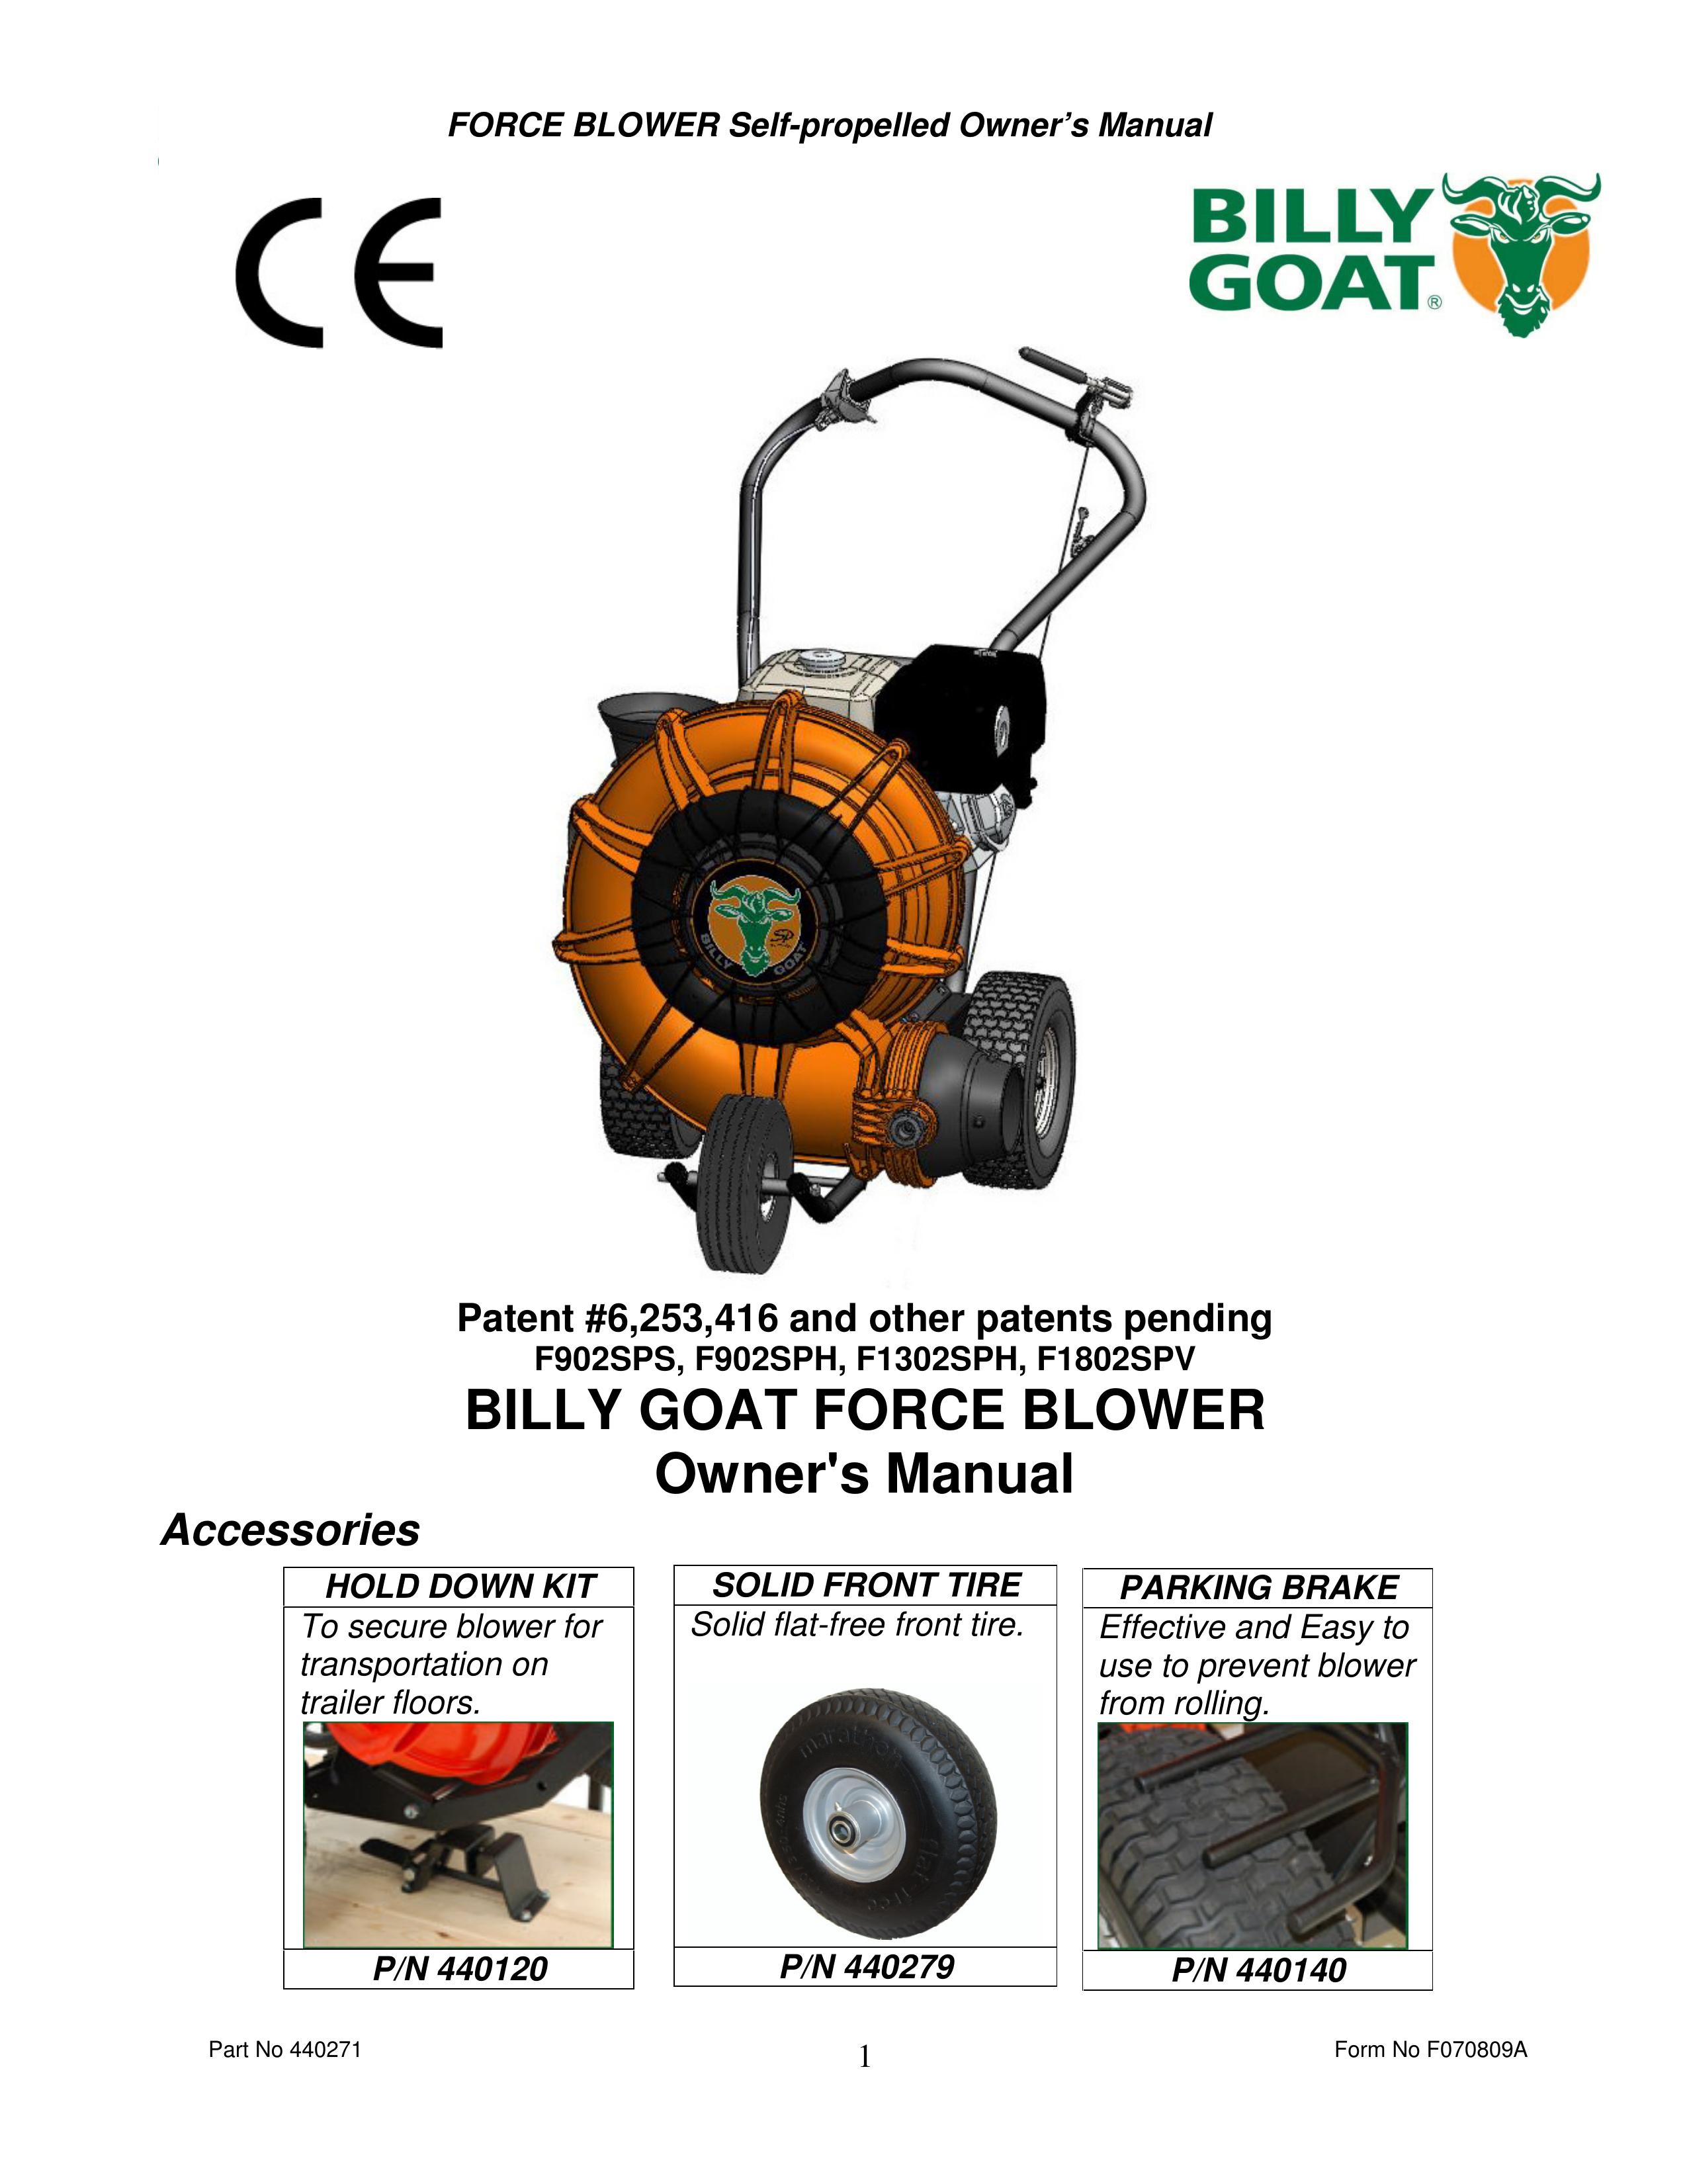 Billy Goat F1802SPV Blower User Manual